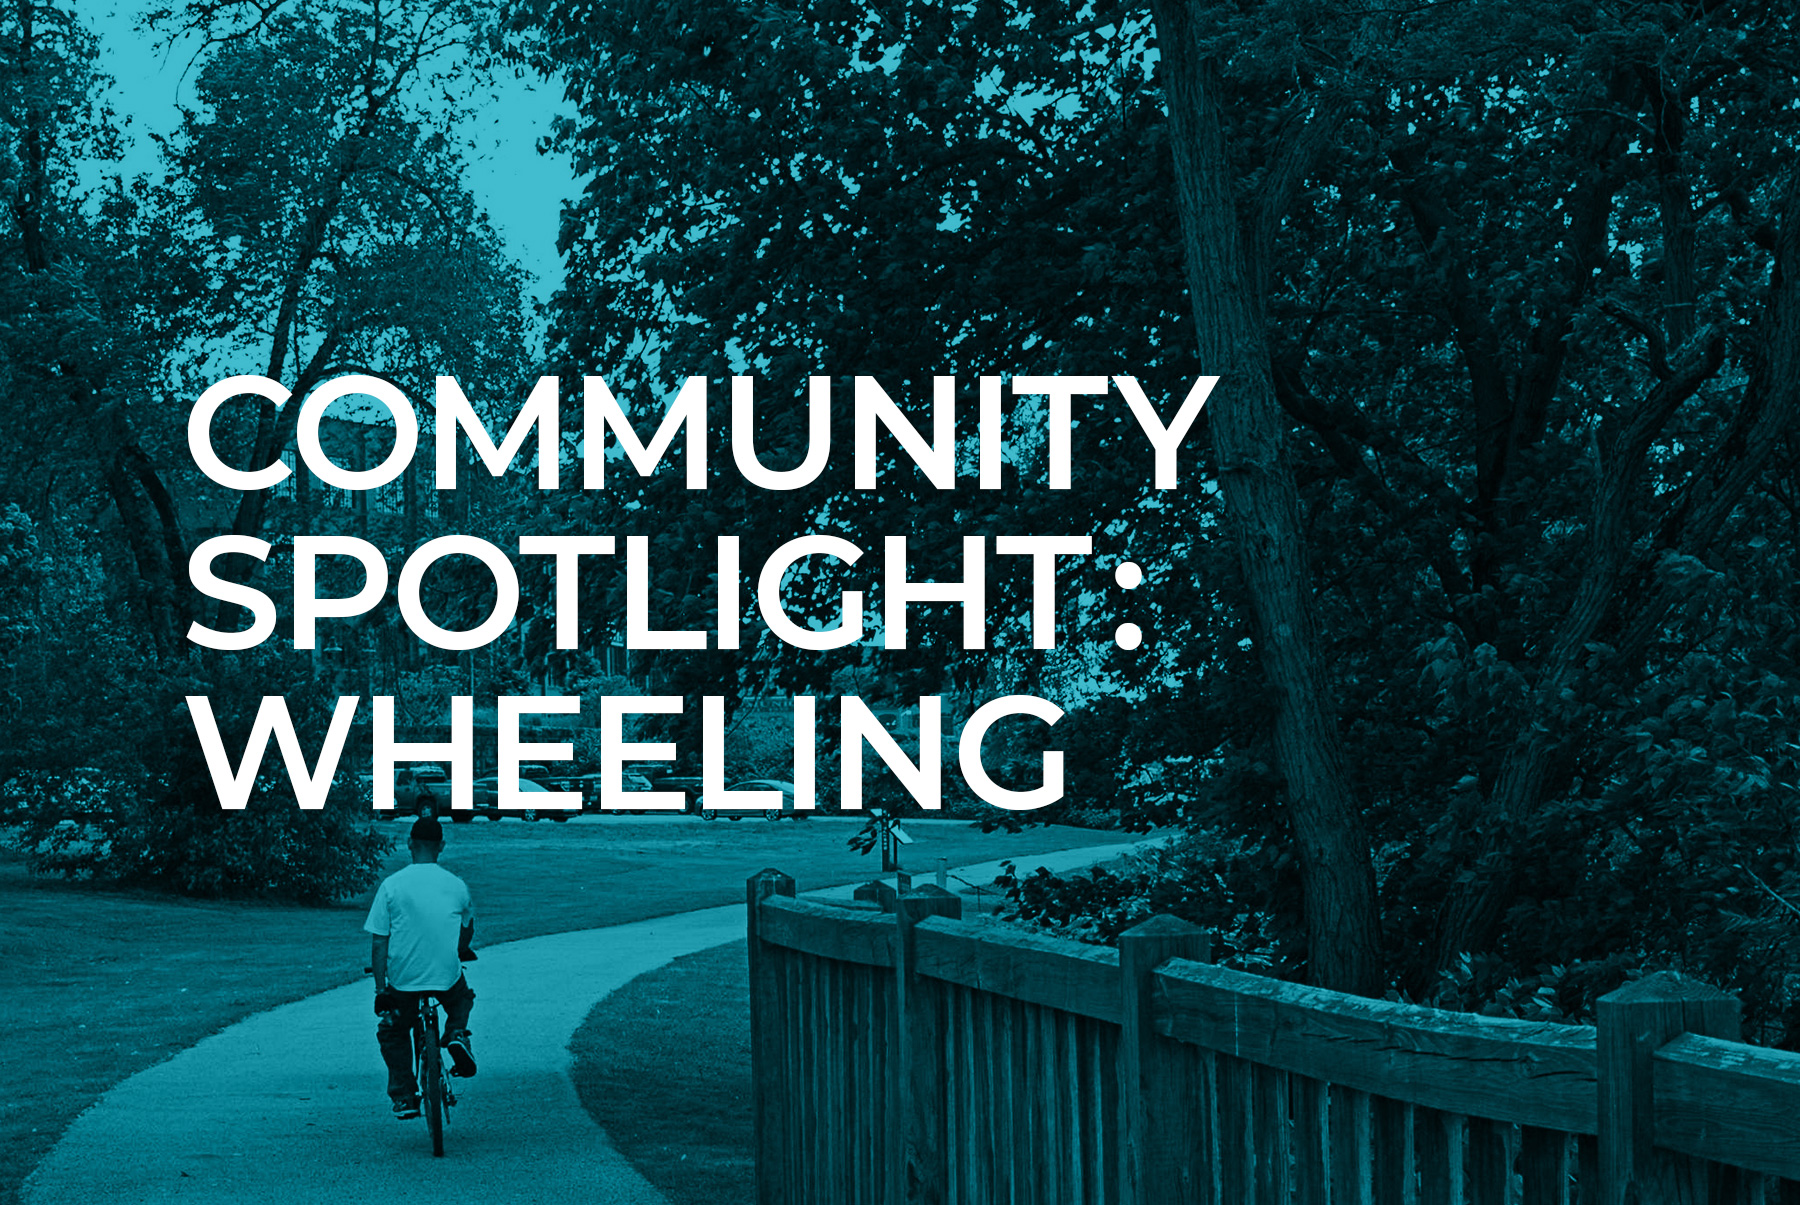 Community Spotlight: Wheeling. Man riding a bike along a walkway.